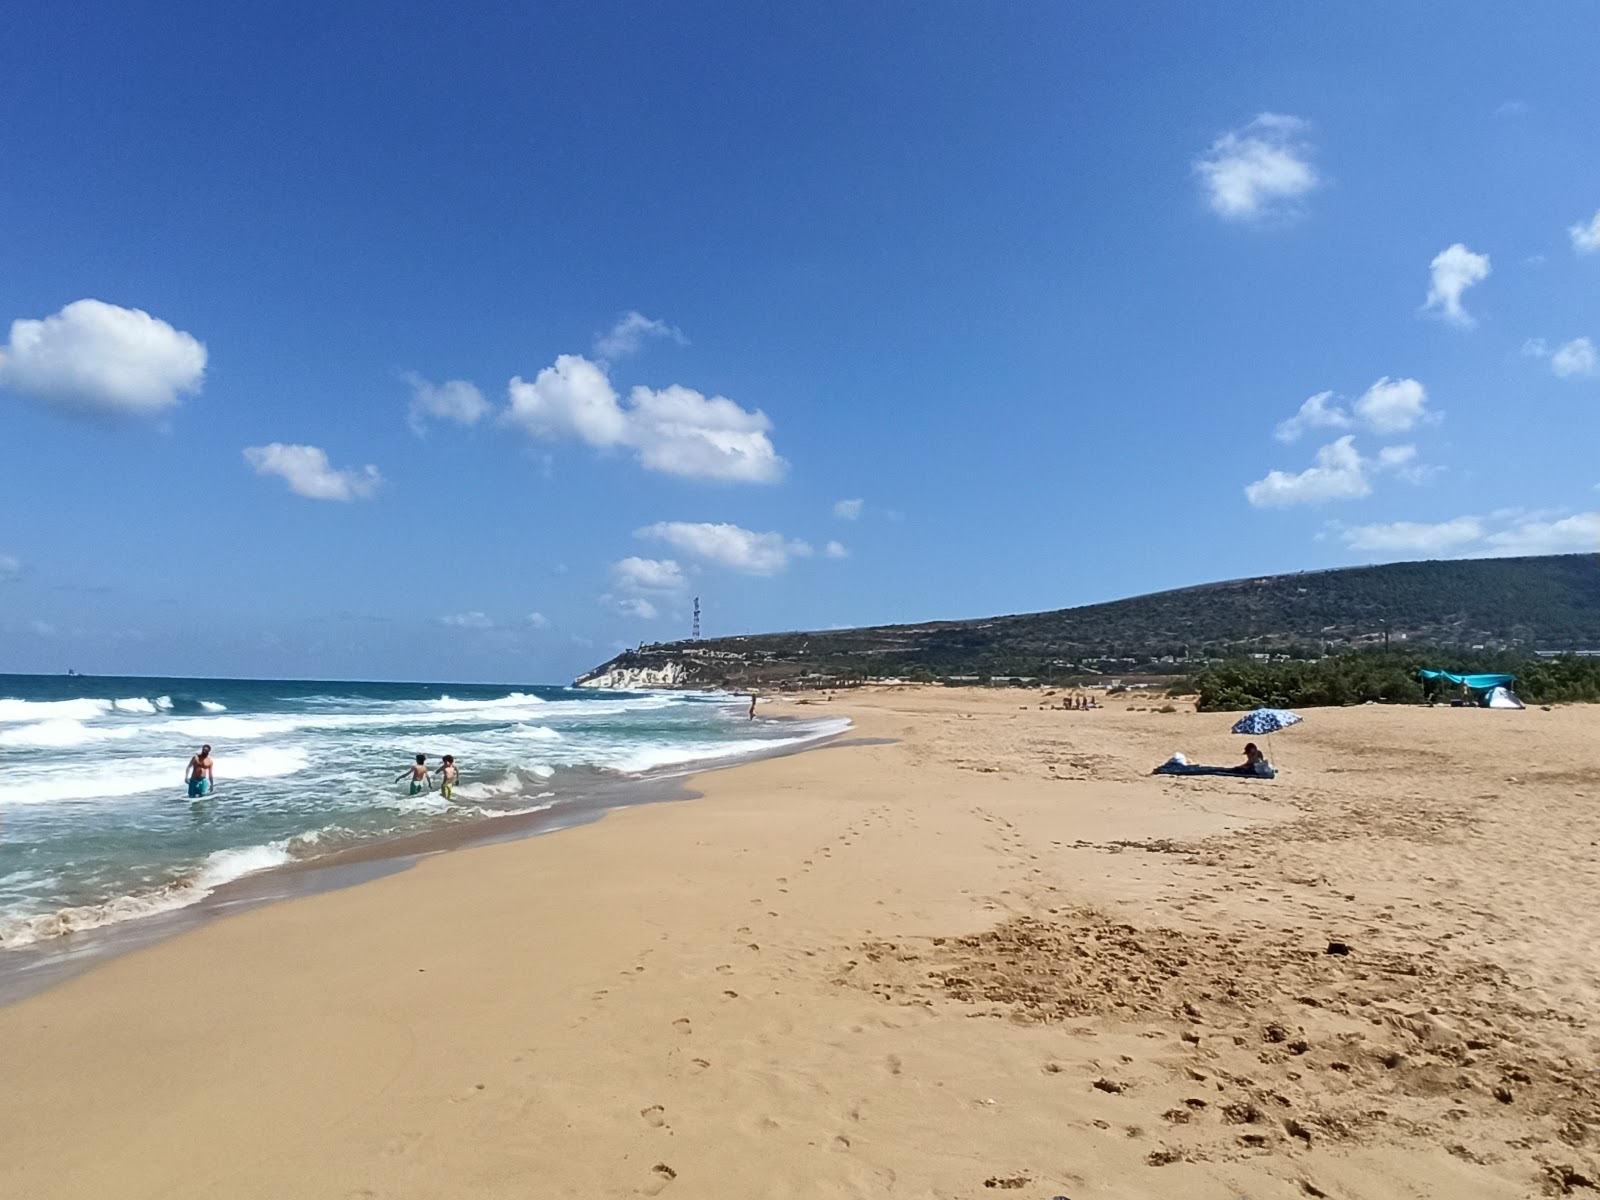 Foto de Yefet's beach - lugar popular entre os apreciadores de relaxamento